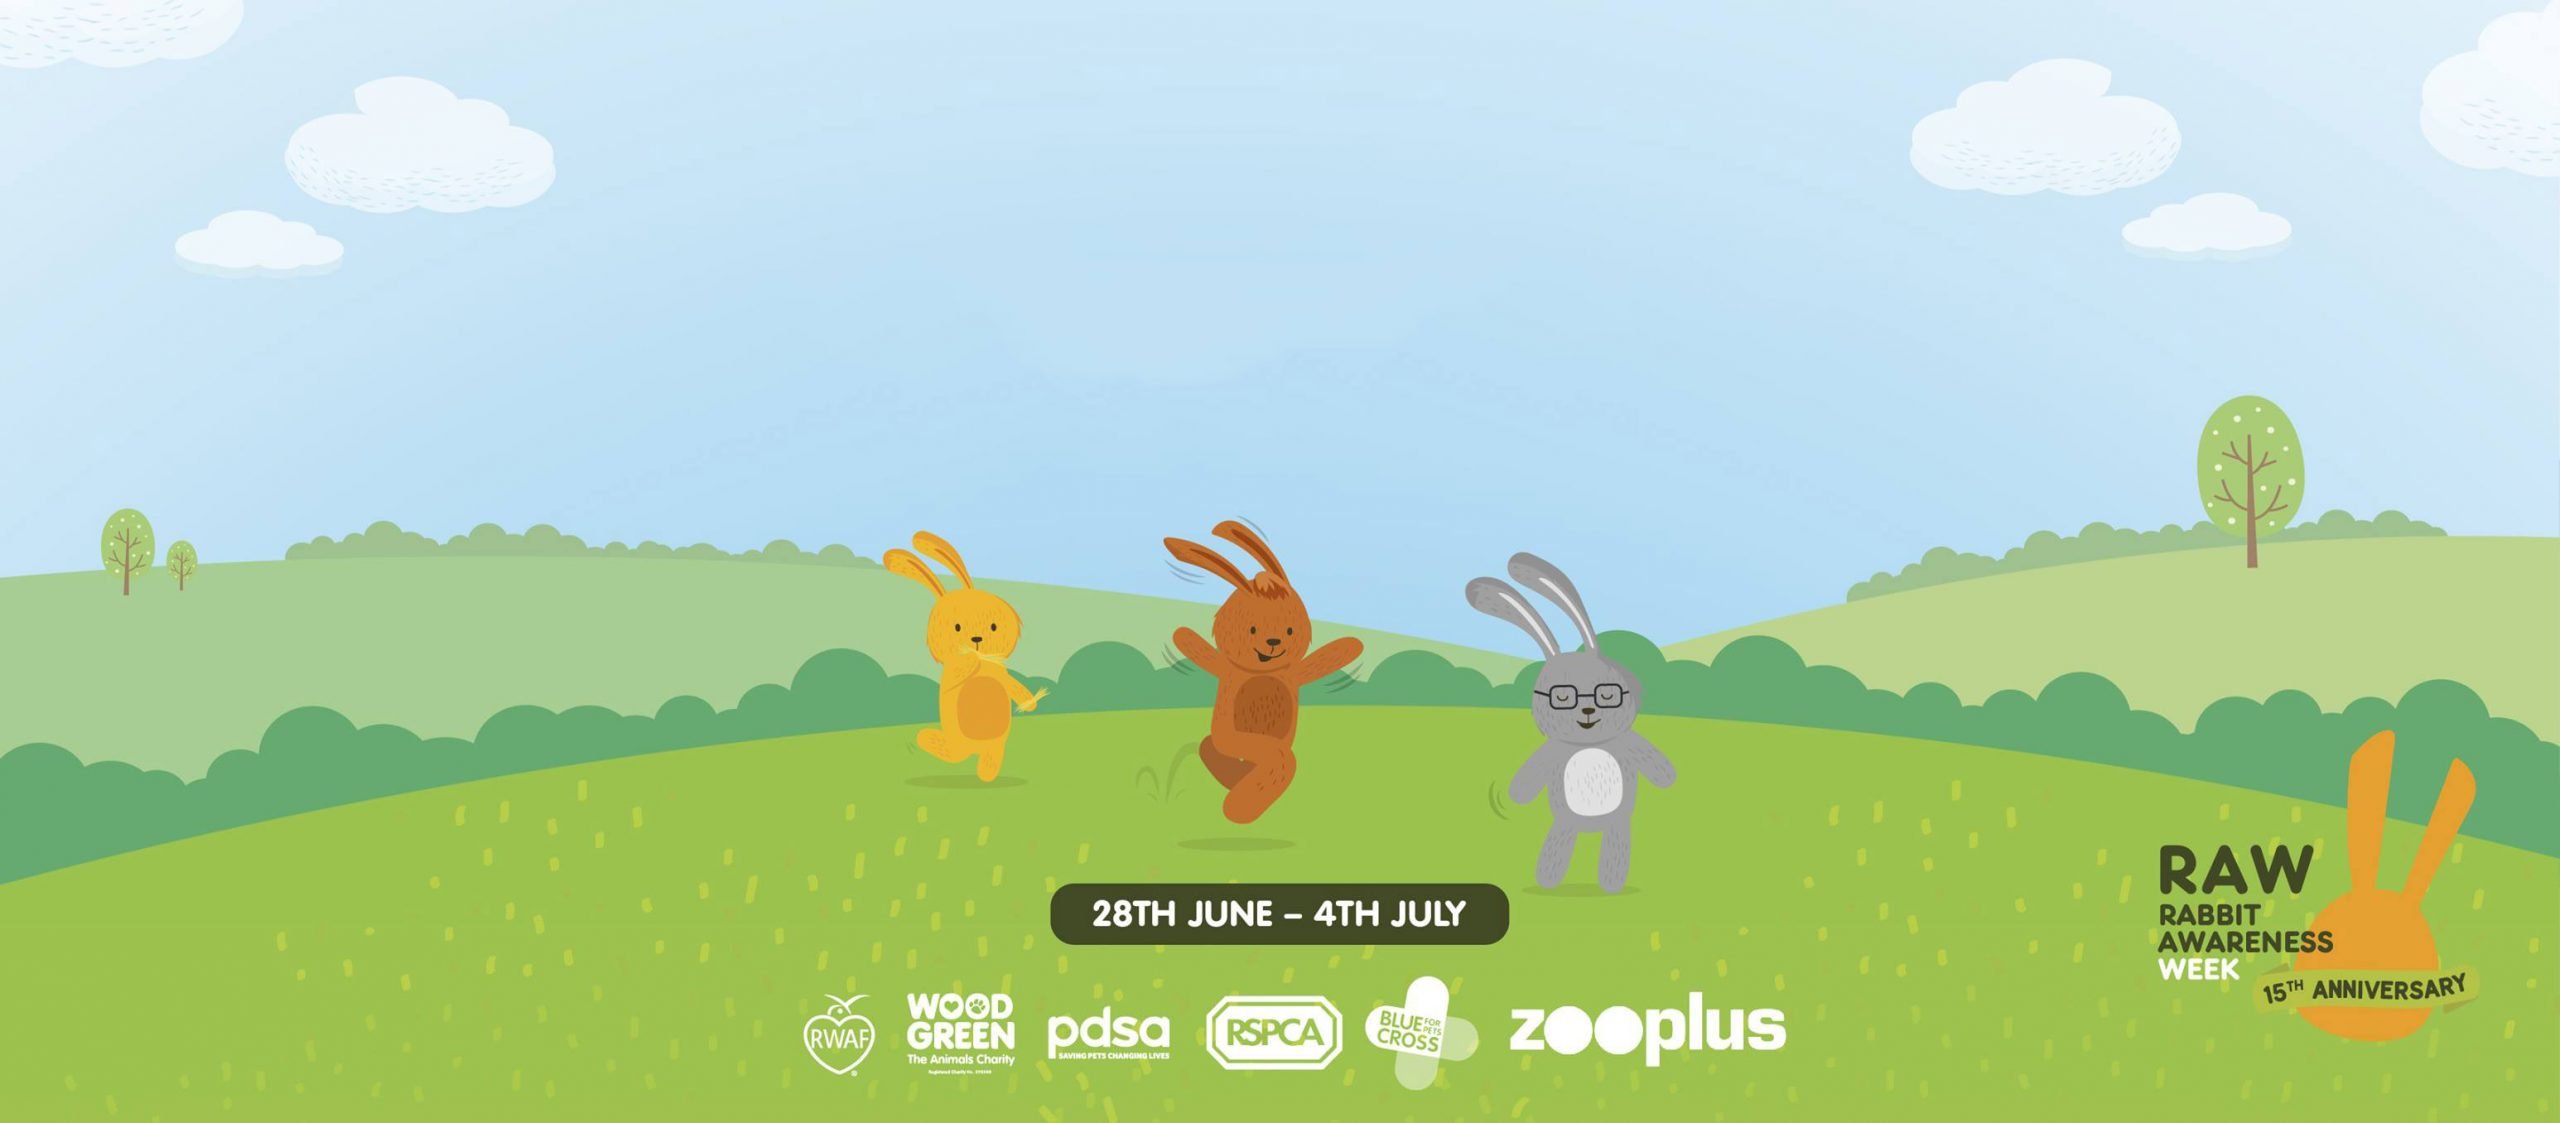 Rabbit Awareness Week 2021